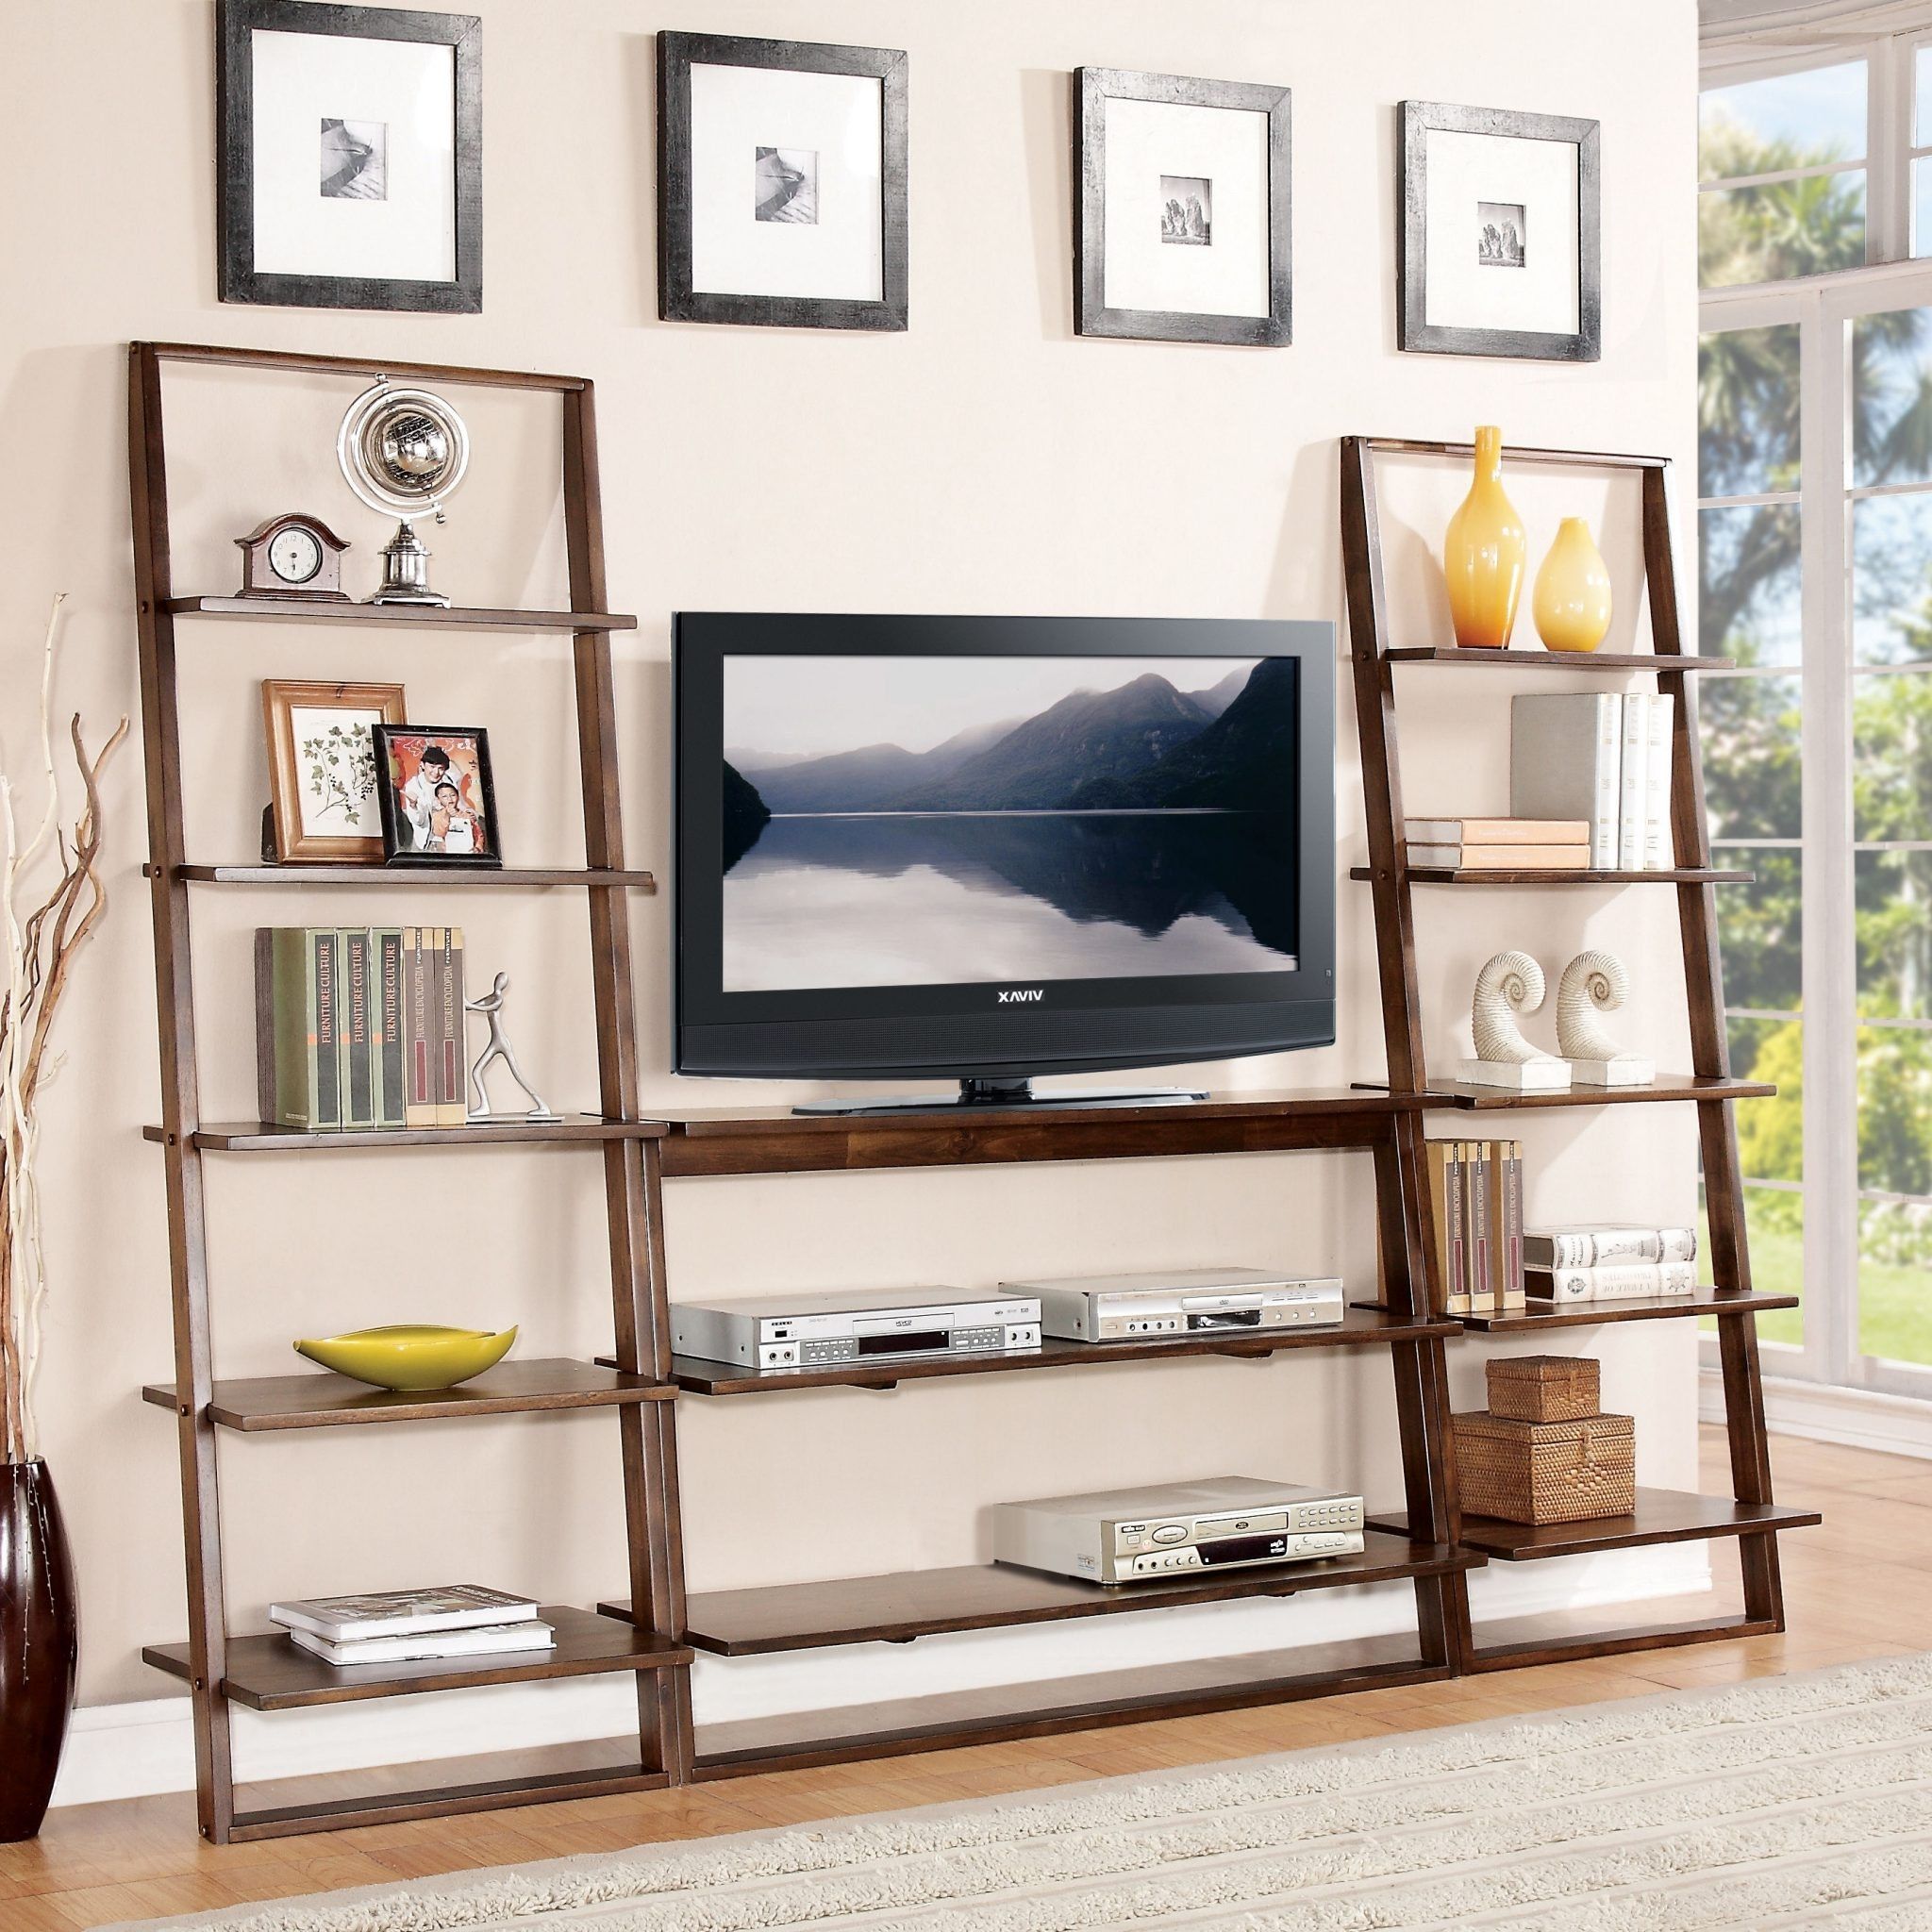 Tv Stands Inspire Black And White Tv Stand Bookshelf Design Ideas Regarding Tv And Bookshelf (View 9 of 15)